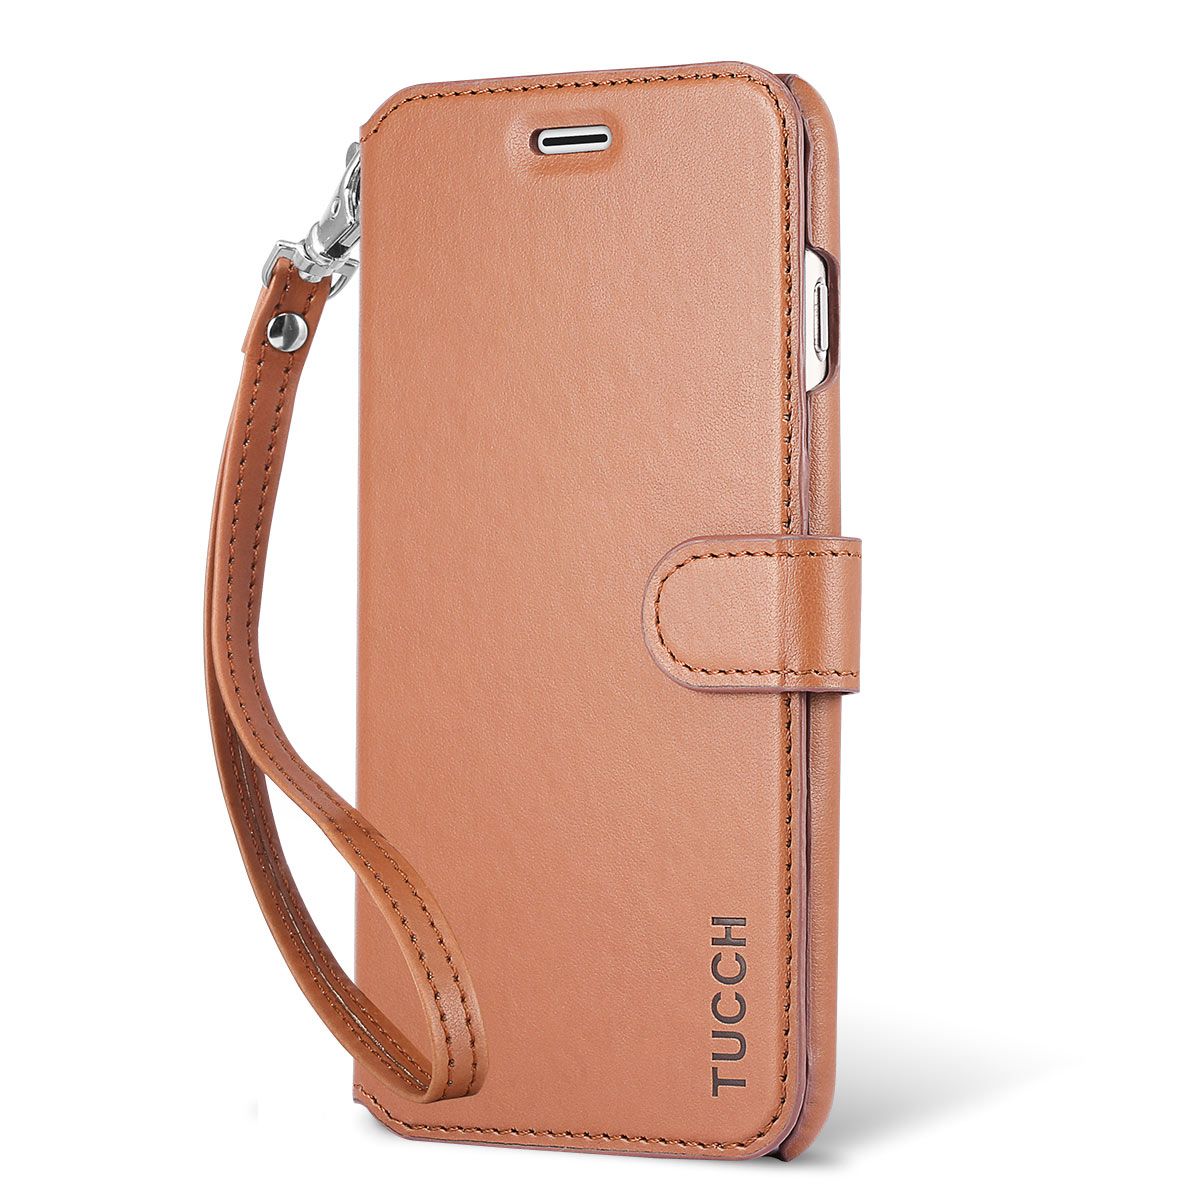 Encyclopedie Verrijken Tenen TUCCH iPhone 6S/6 Plus Leather Wallet Phone Case, Wrist Strap